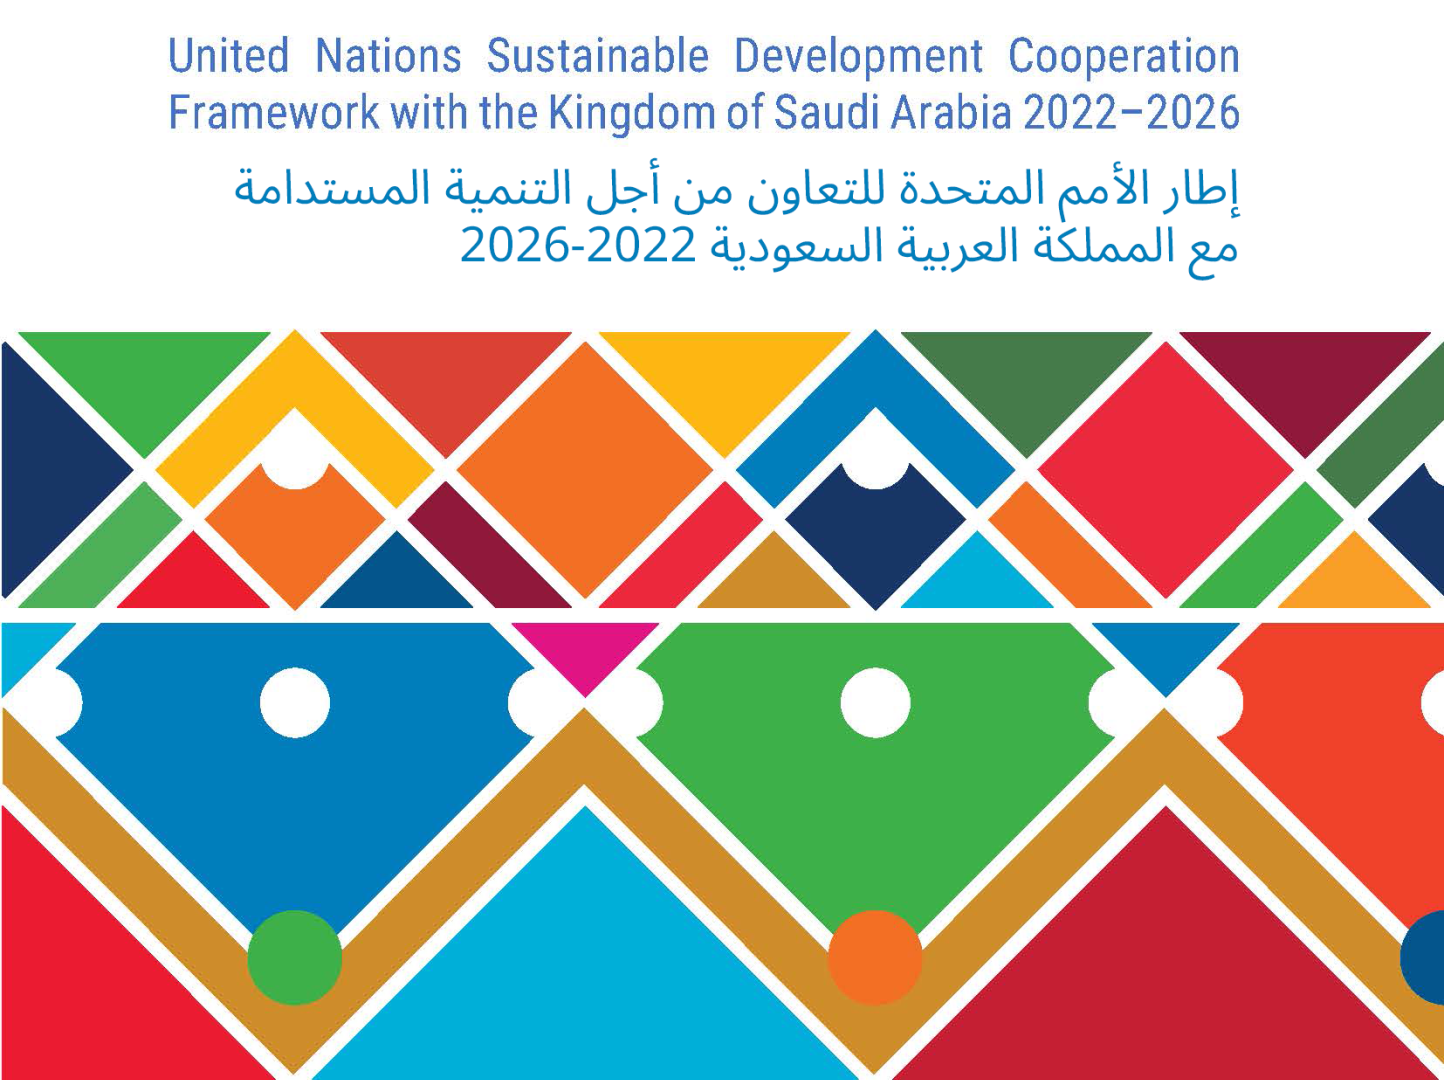 The UN Sustainable Development Cooperation Framework | United